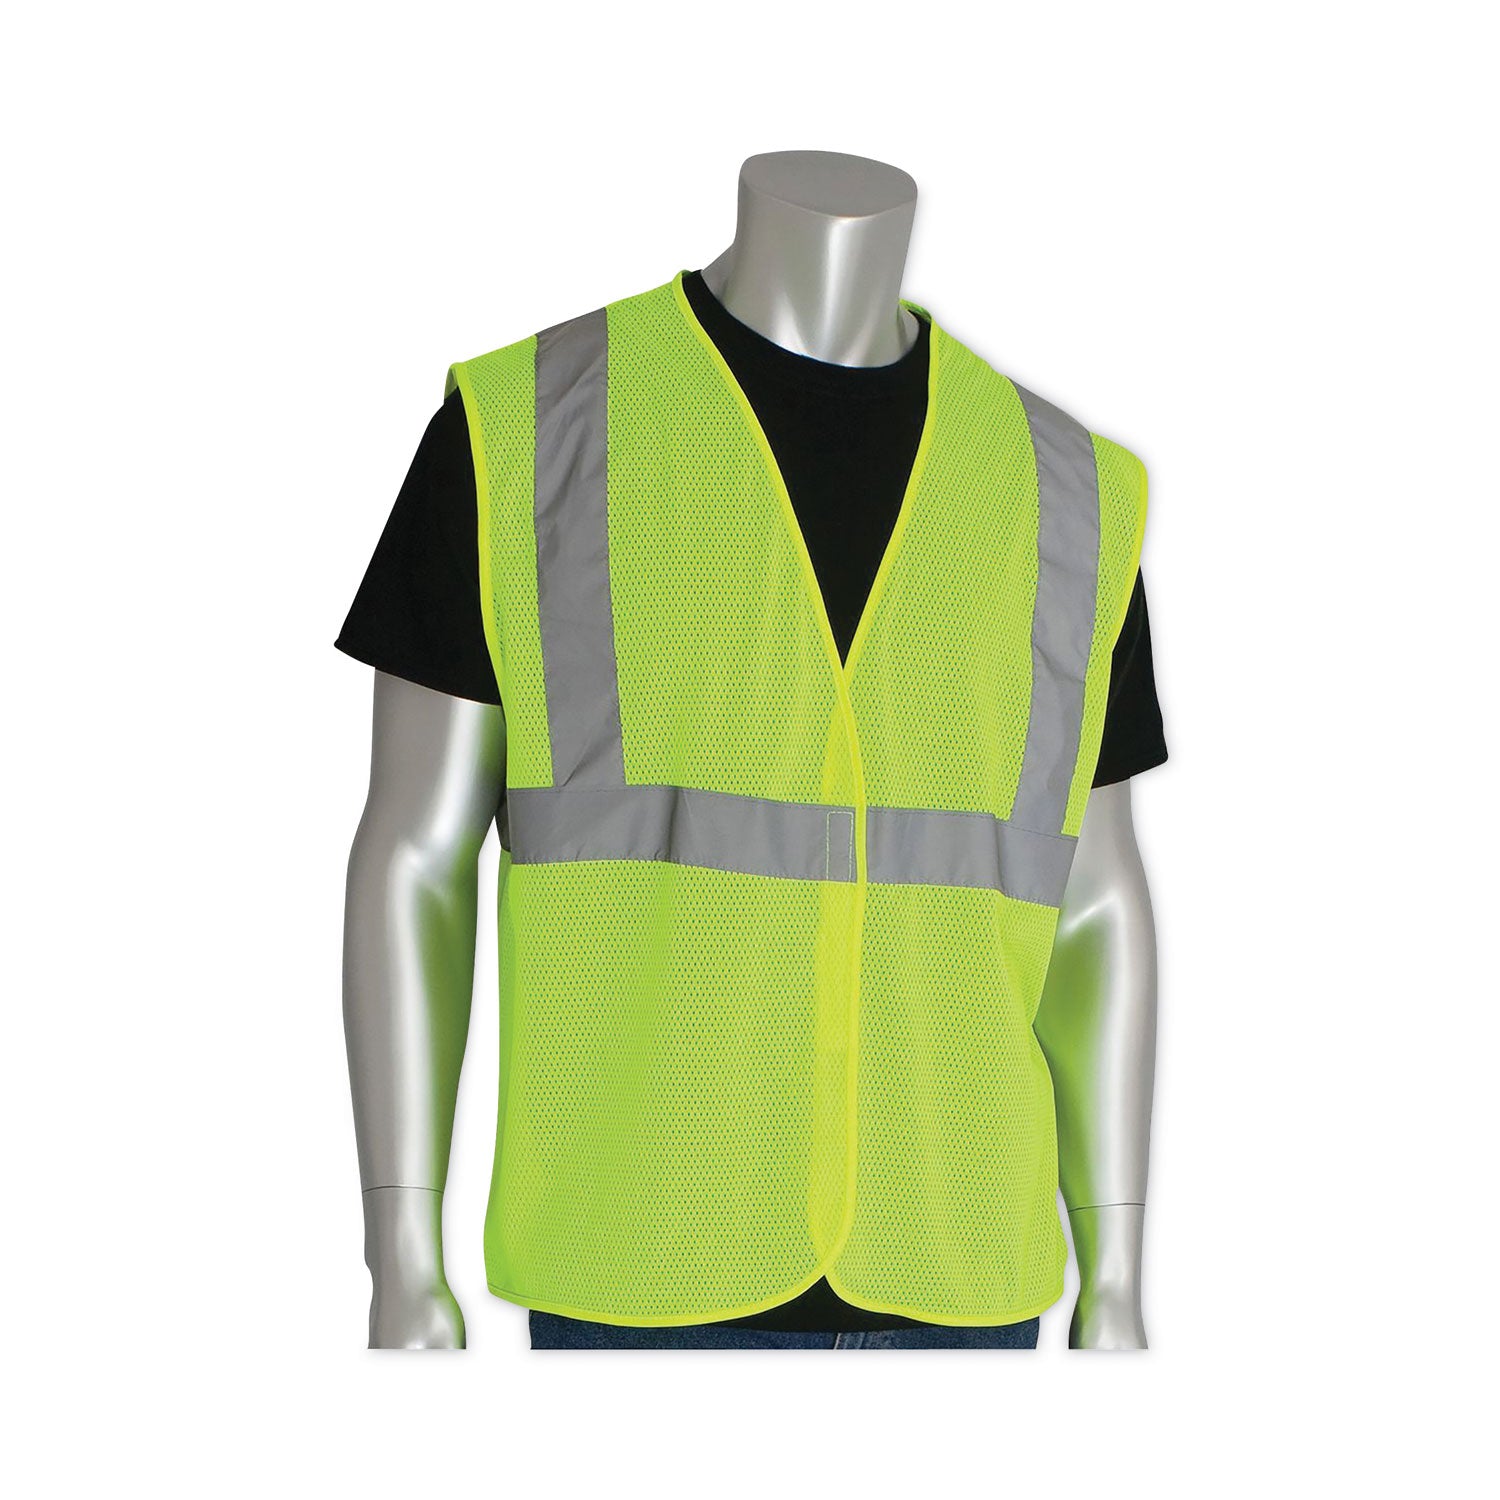 zipper-safety-vest-2x-large-hi-viz-lime-yellow_pid302mvgzly2x - 2